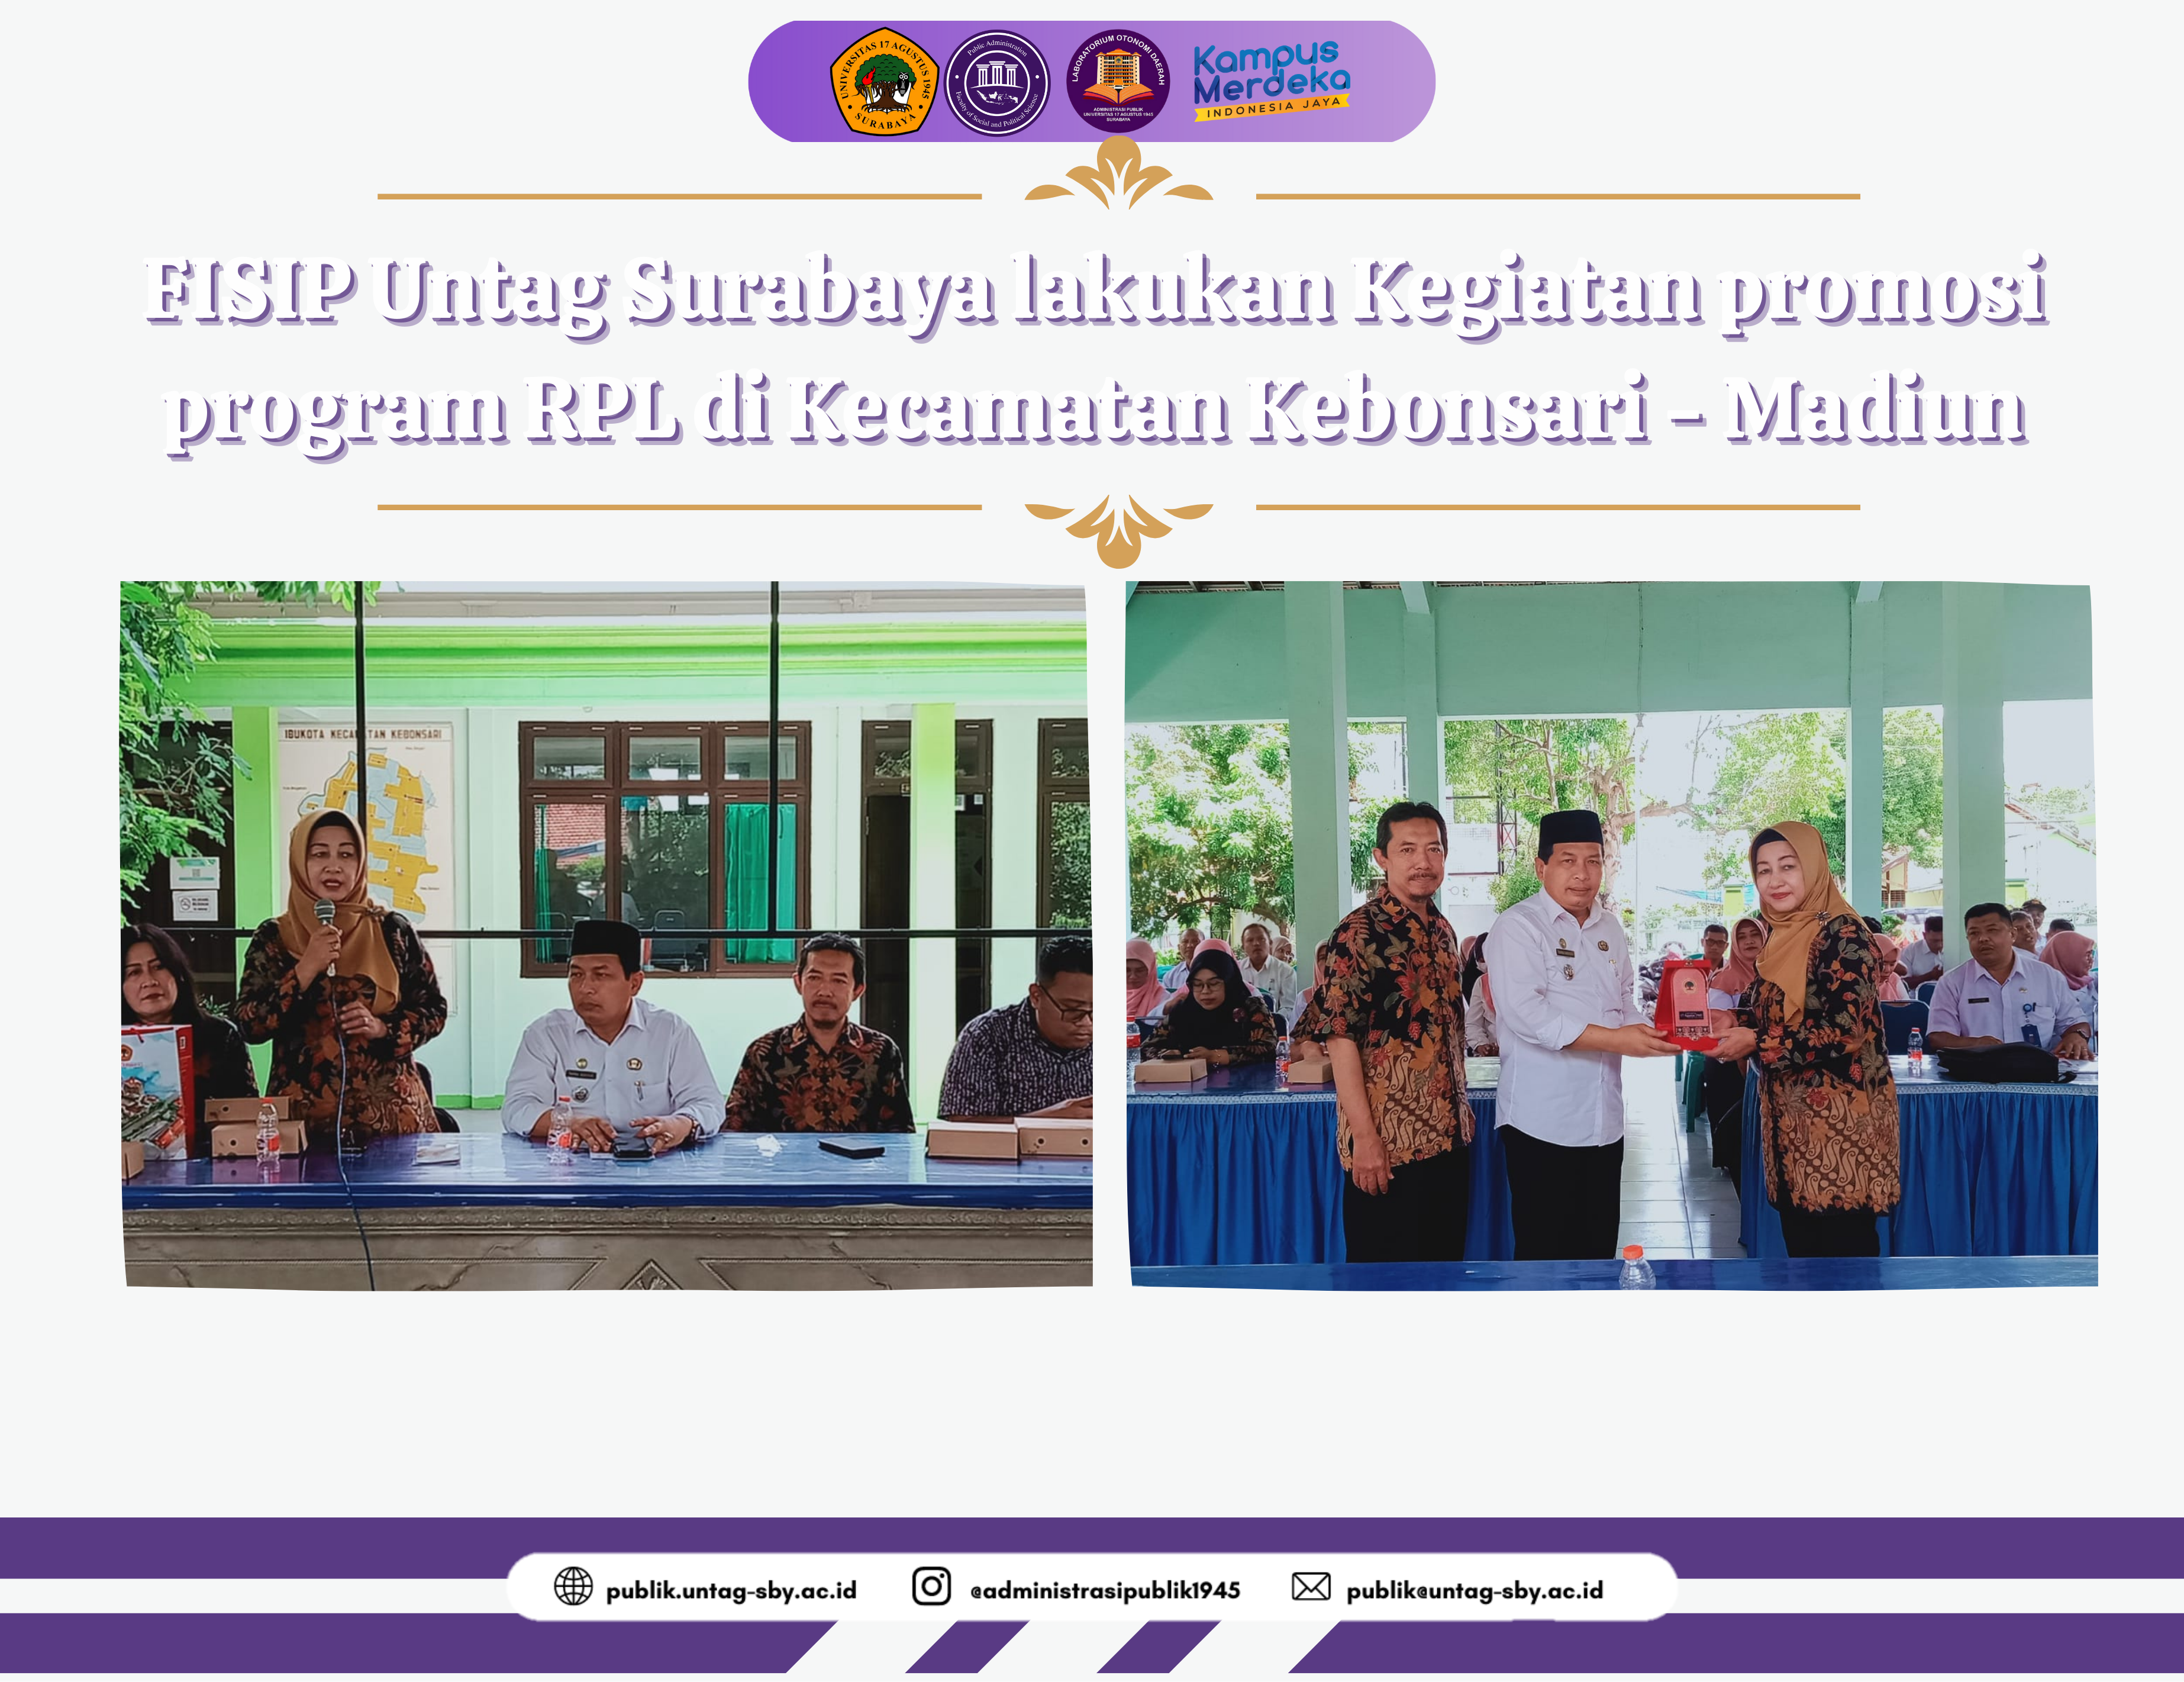 FISIP Untag Surabaya lakukan Kegiatan promosi program RPL di Kecamatan Kebonsari - Madiun